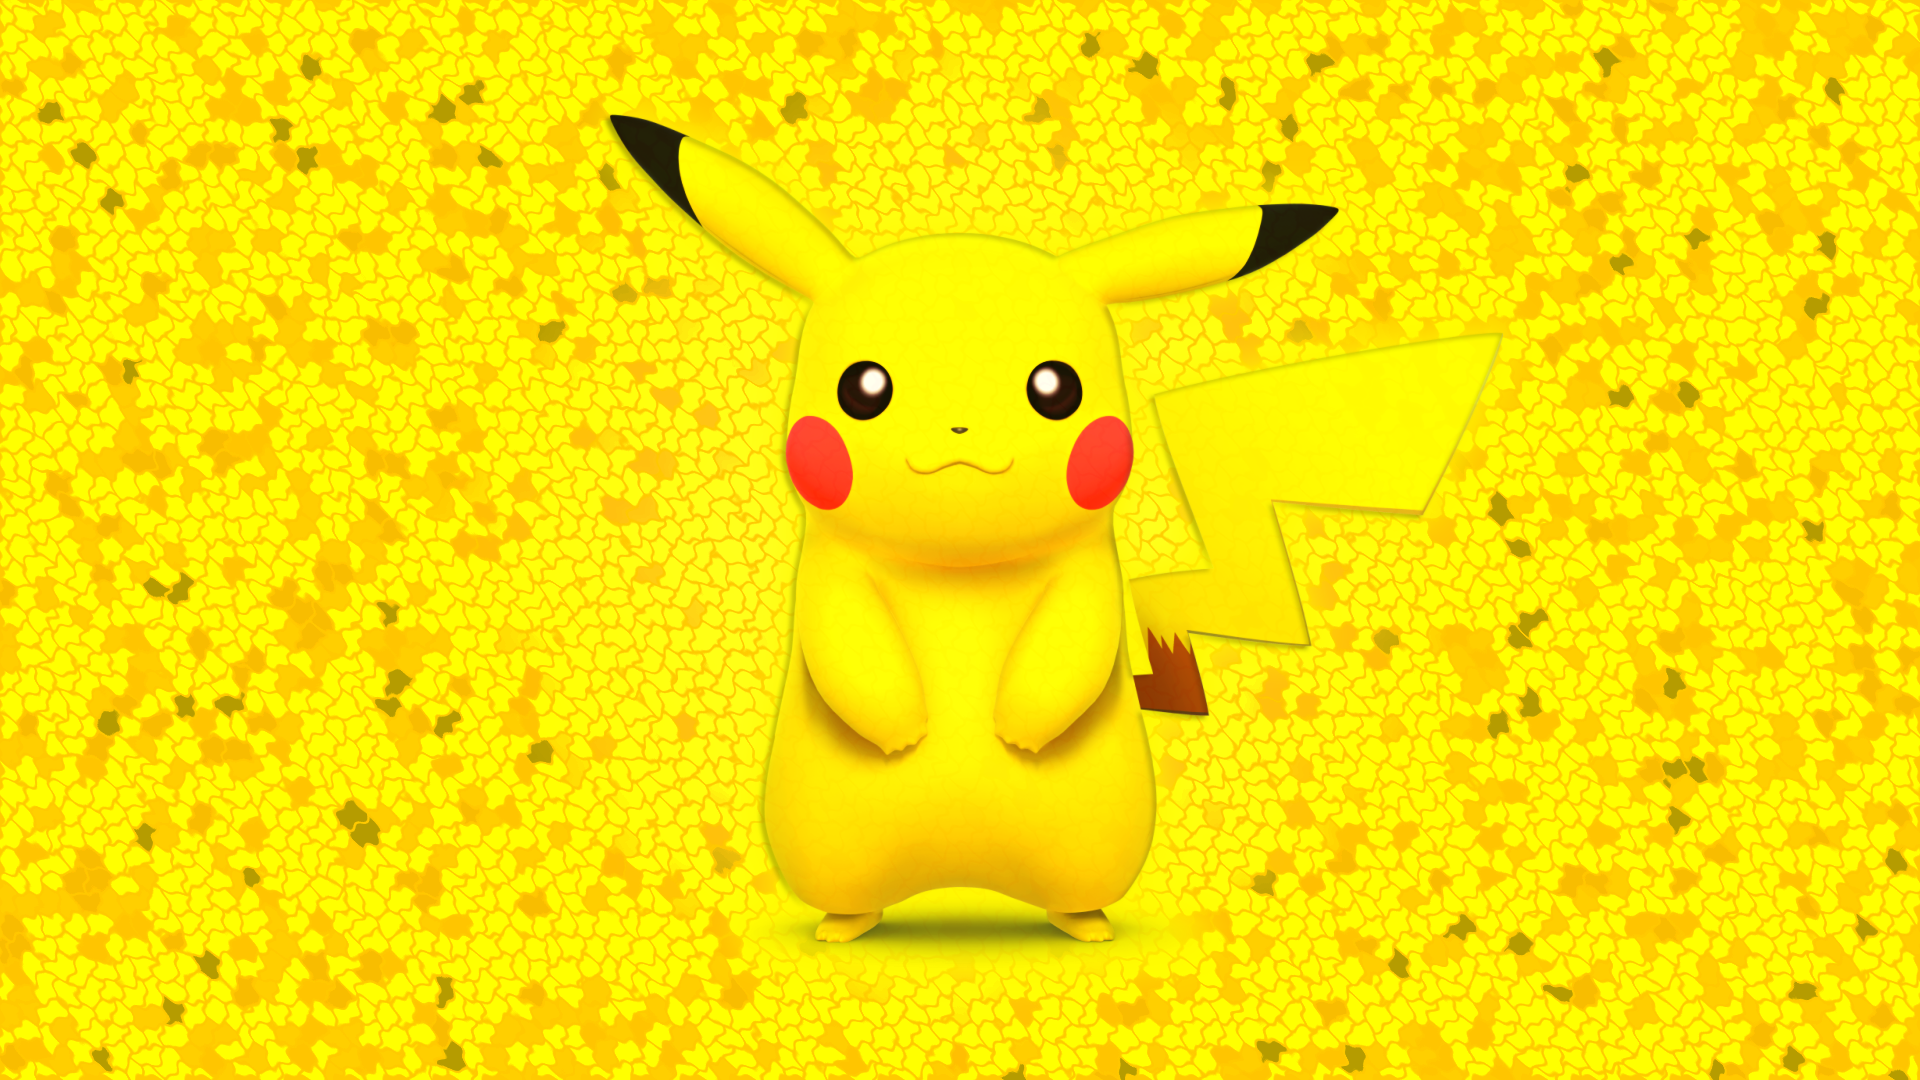 Pikachu Pokemon Face Wallpaper Wallpaperlepi